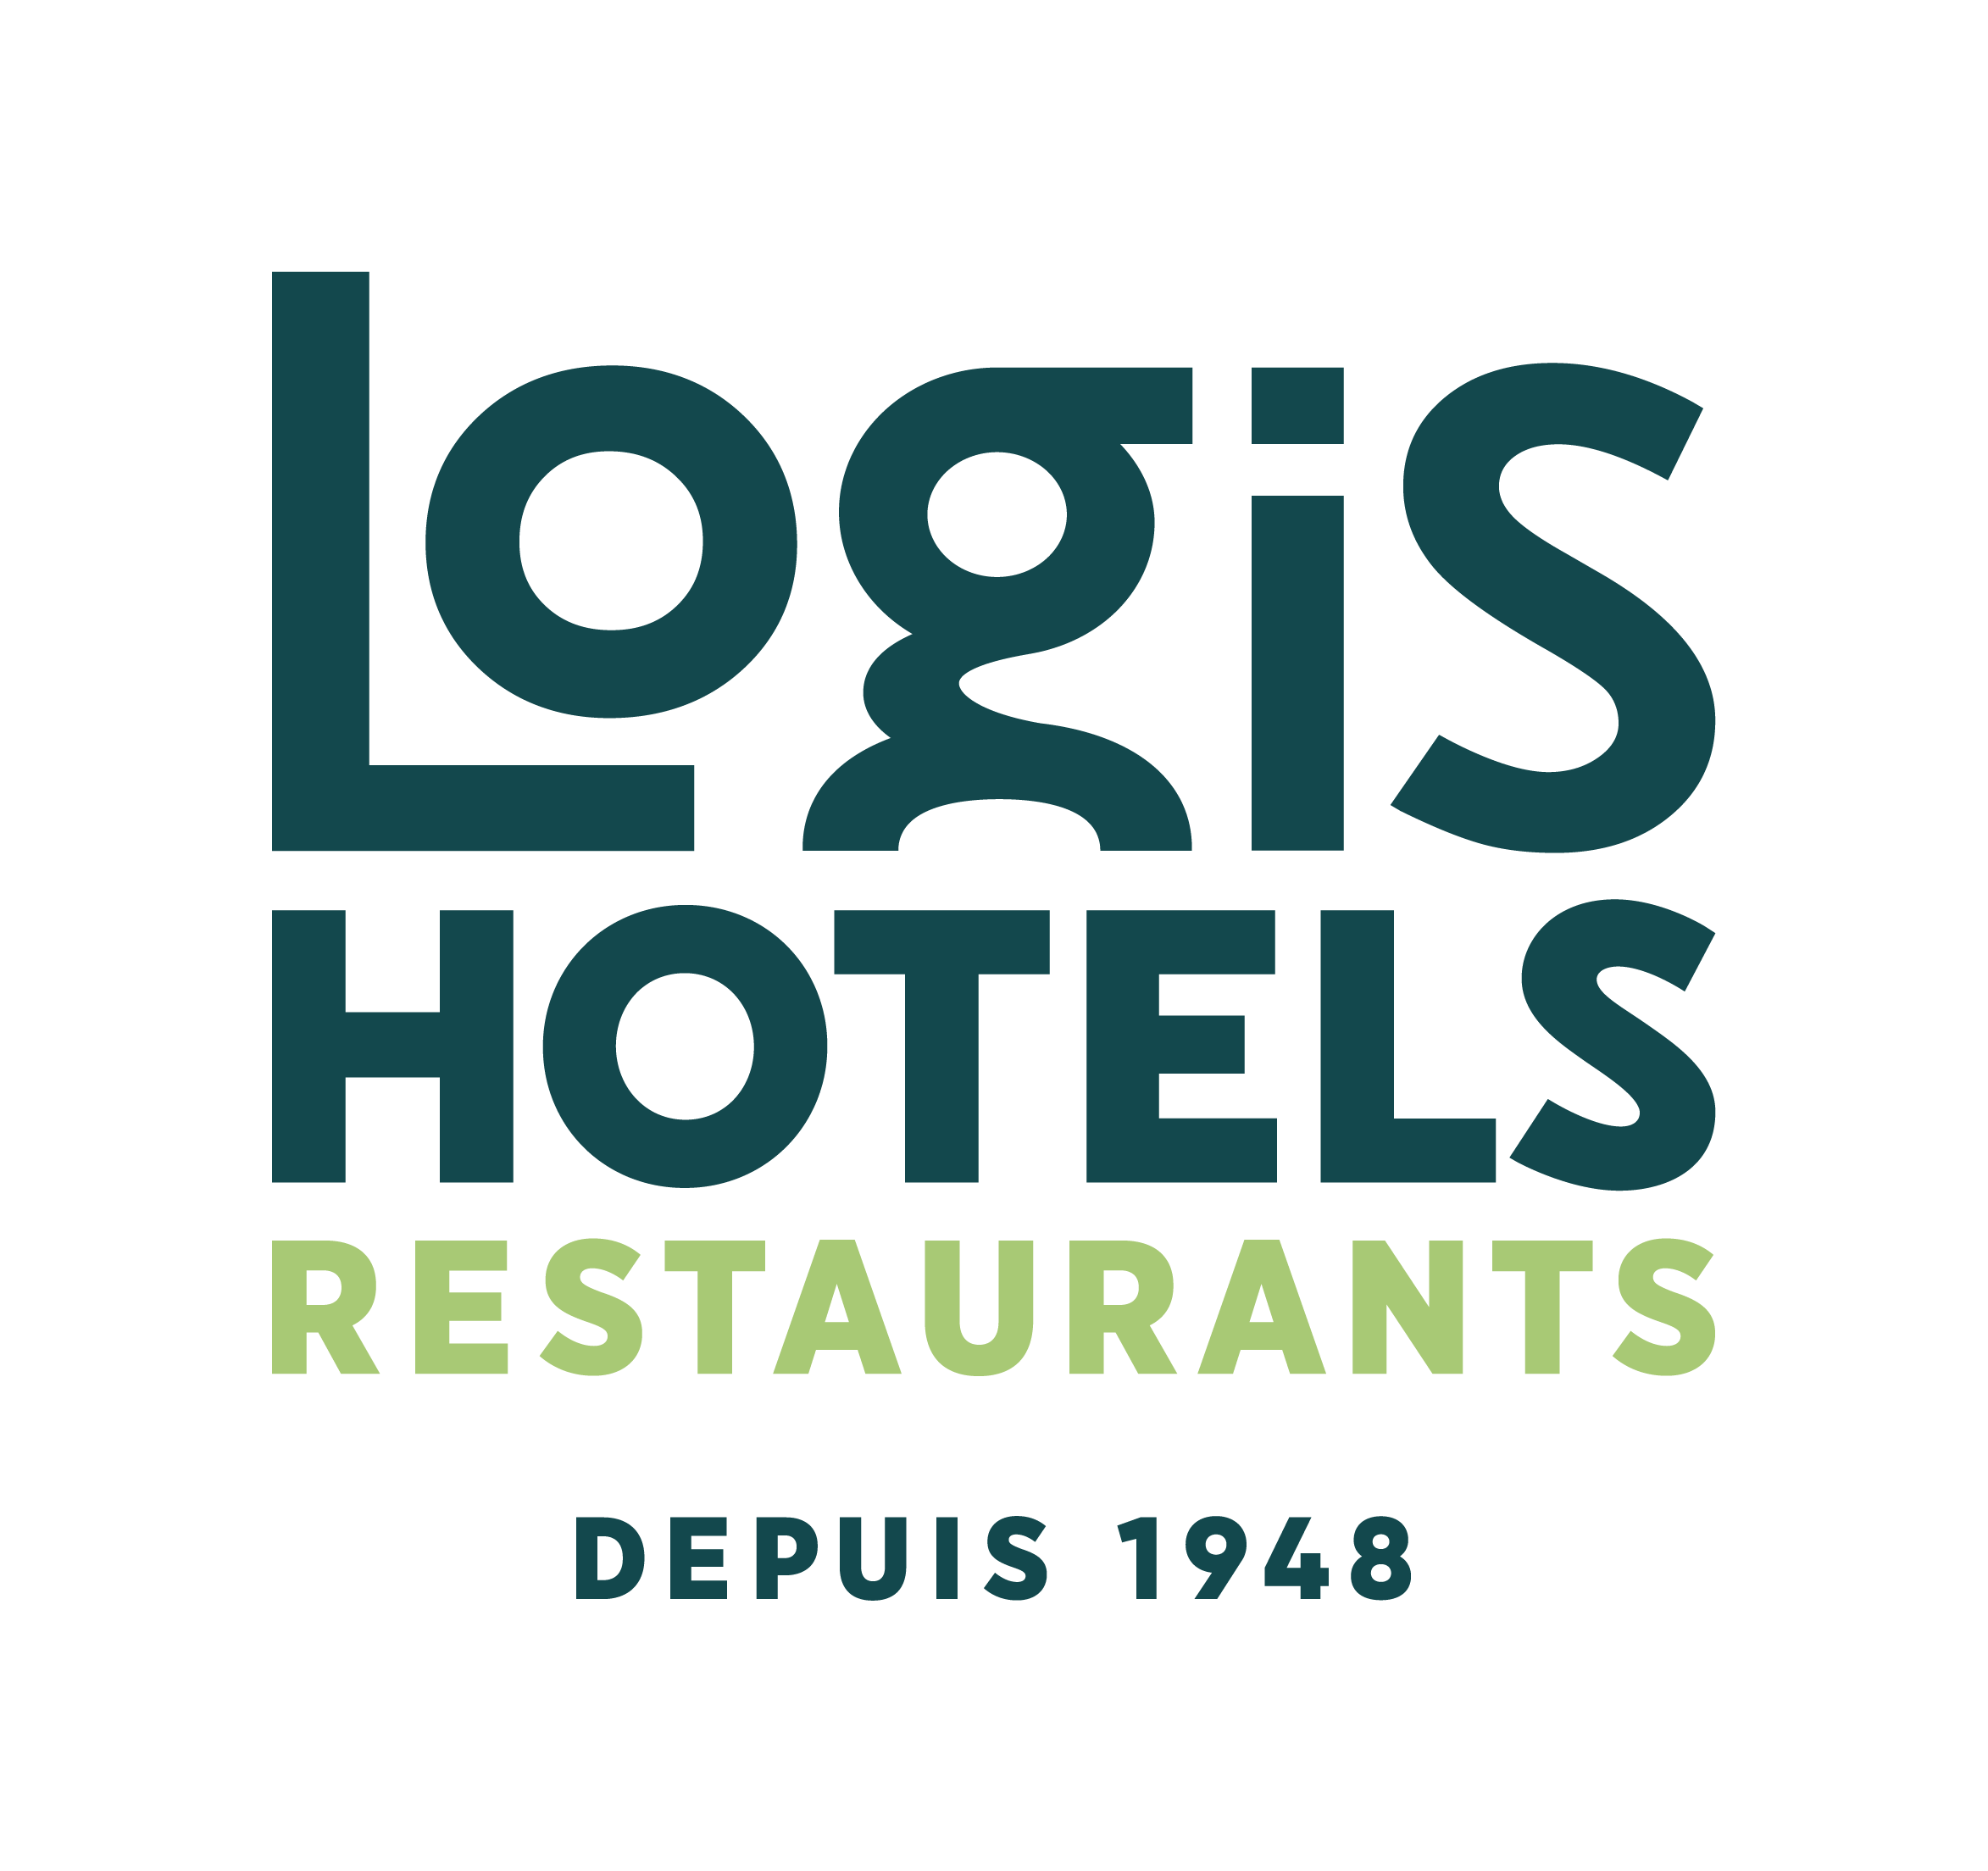 LOGIS_HOTELS_RESTAURANTS_DEPUIS_1948_LOGOTYPE_EXECUTE_POSITIF_RVB.png